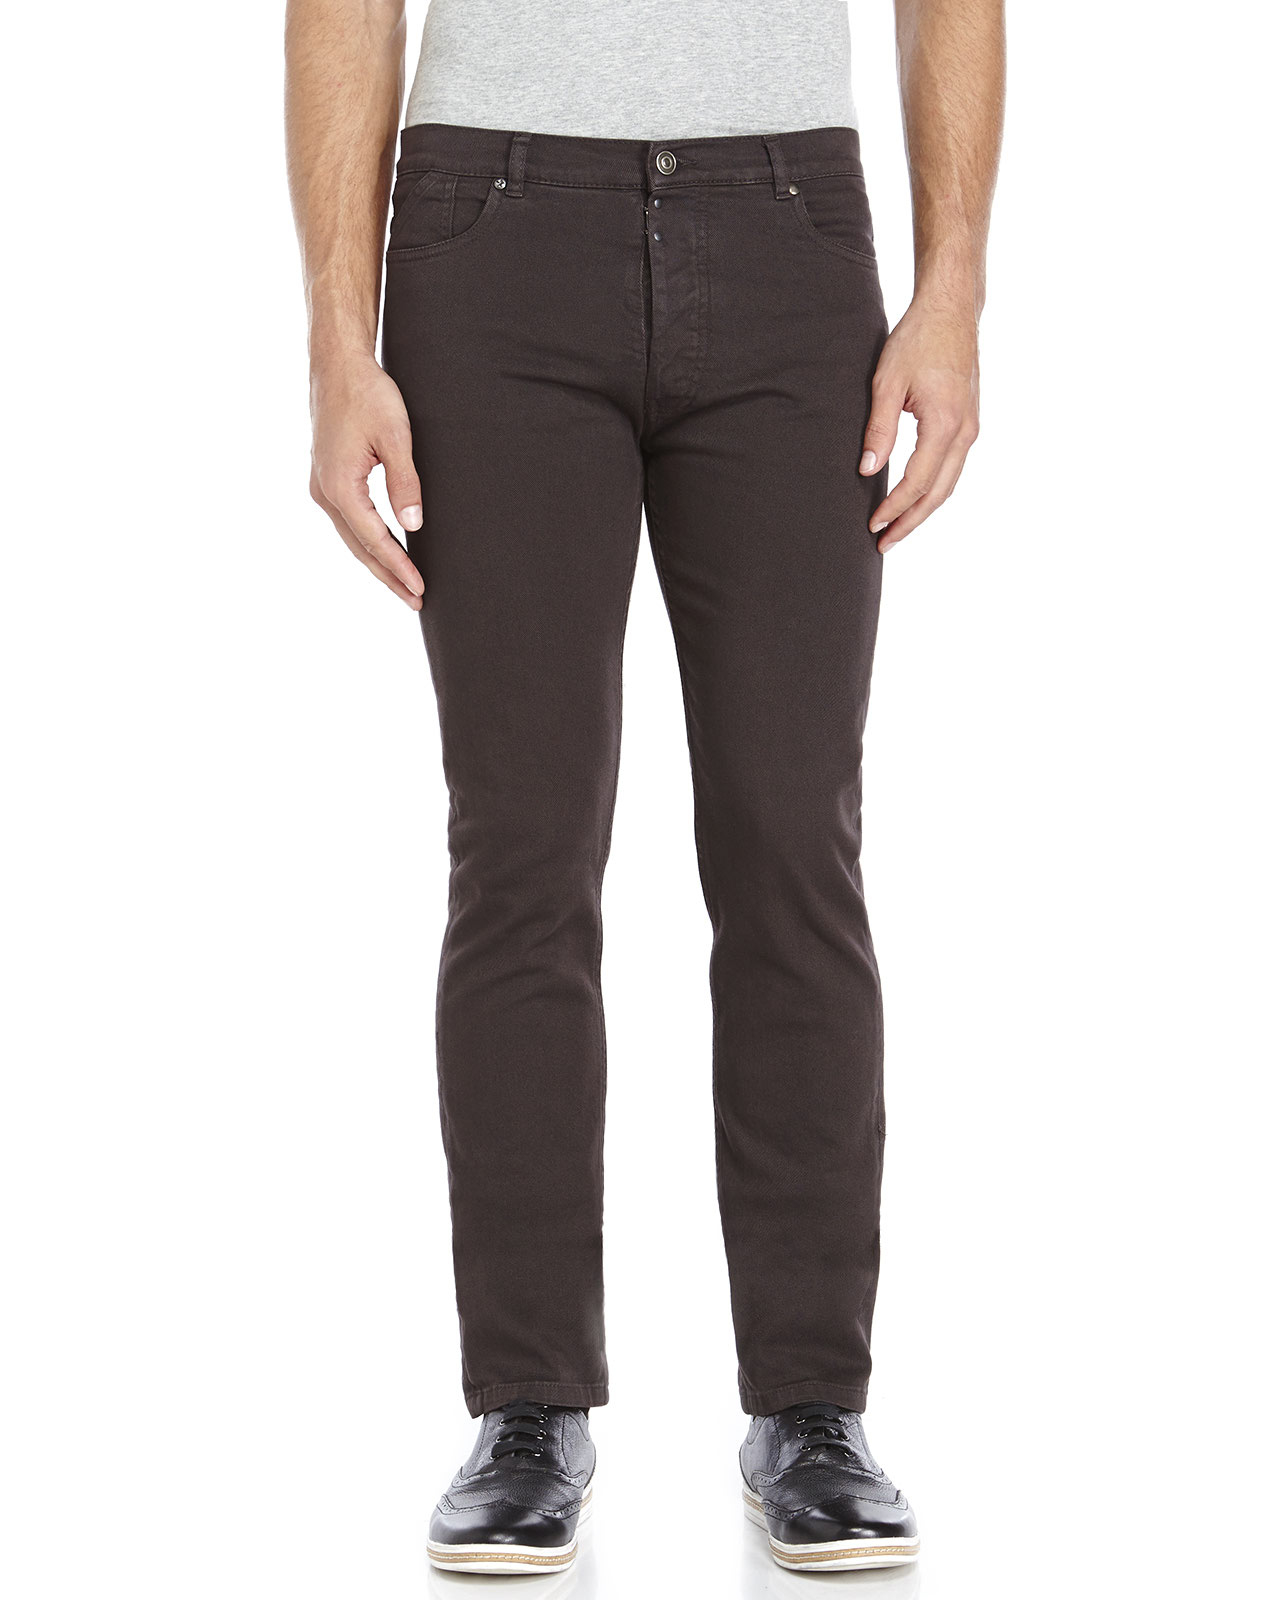 Maison margiela Slim Jeans in Brown for Men (Dark Brown) | Lyst